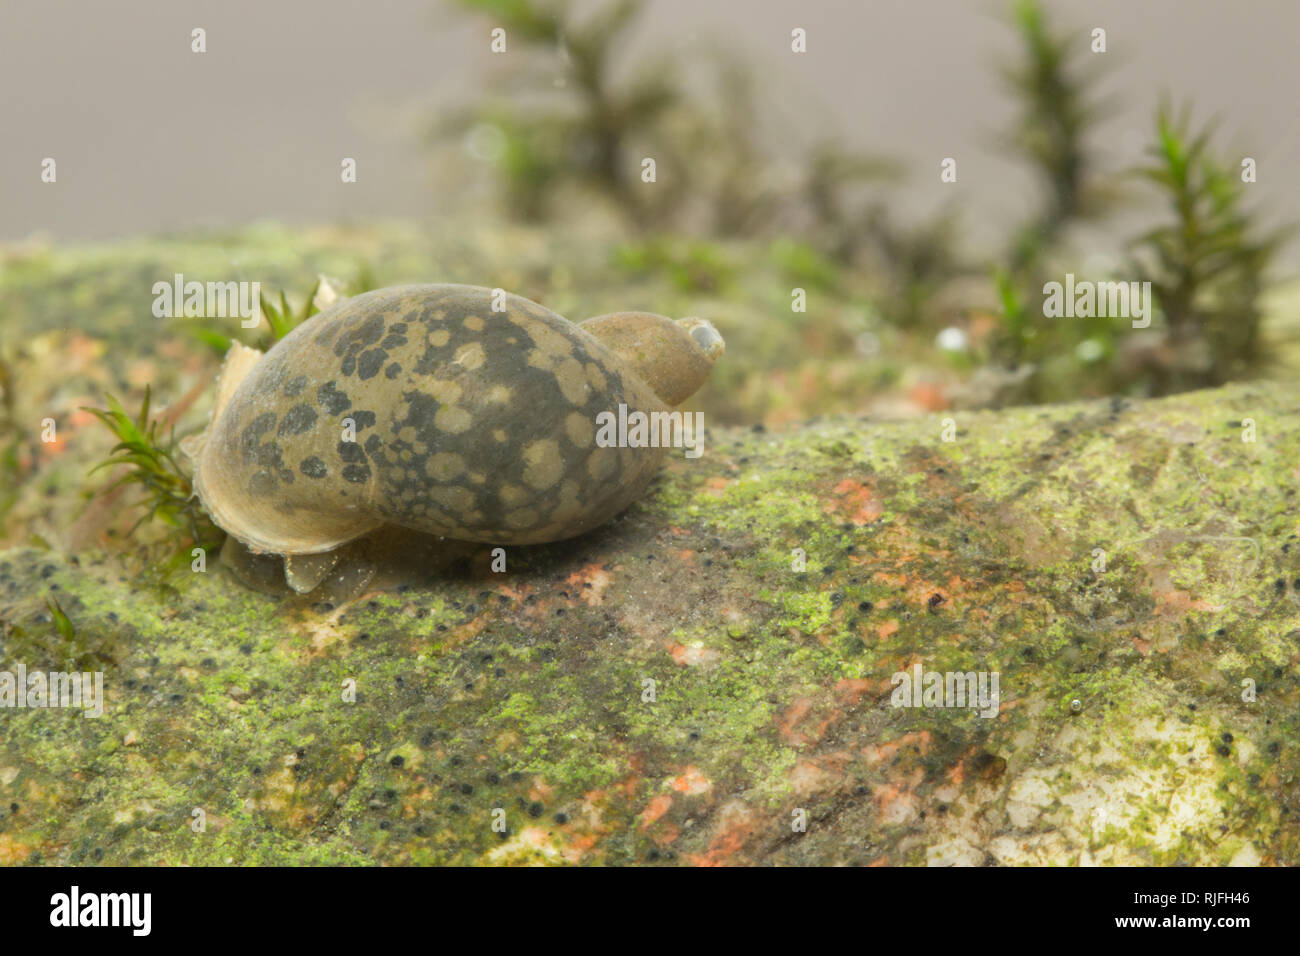 Freshwater pond snail Stock Photo